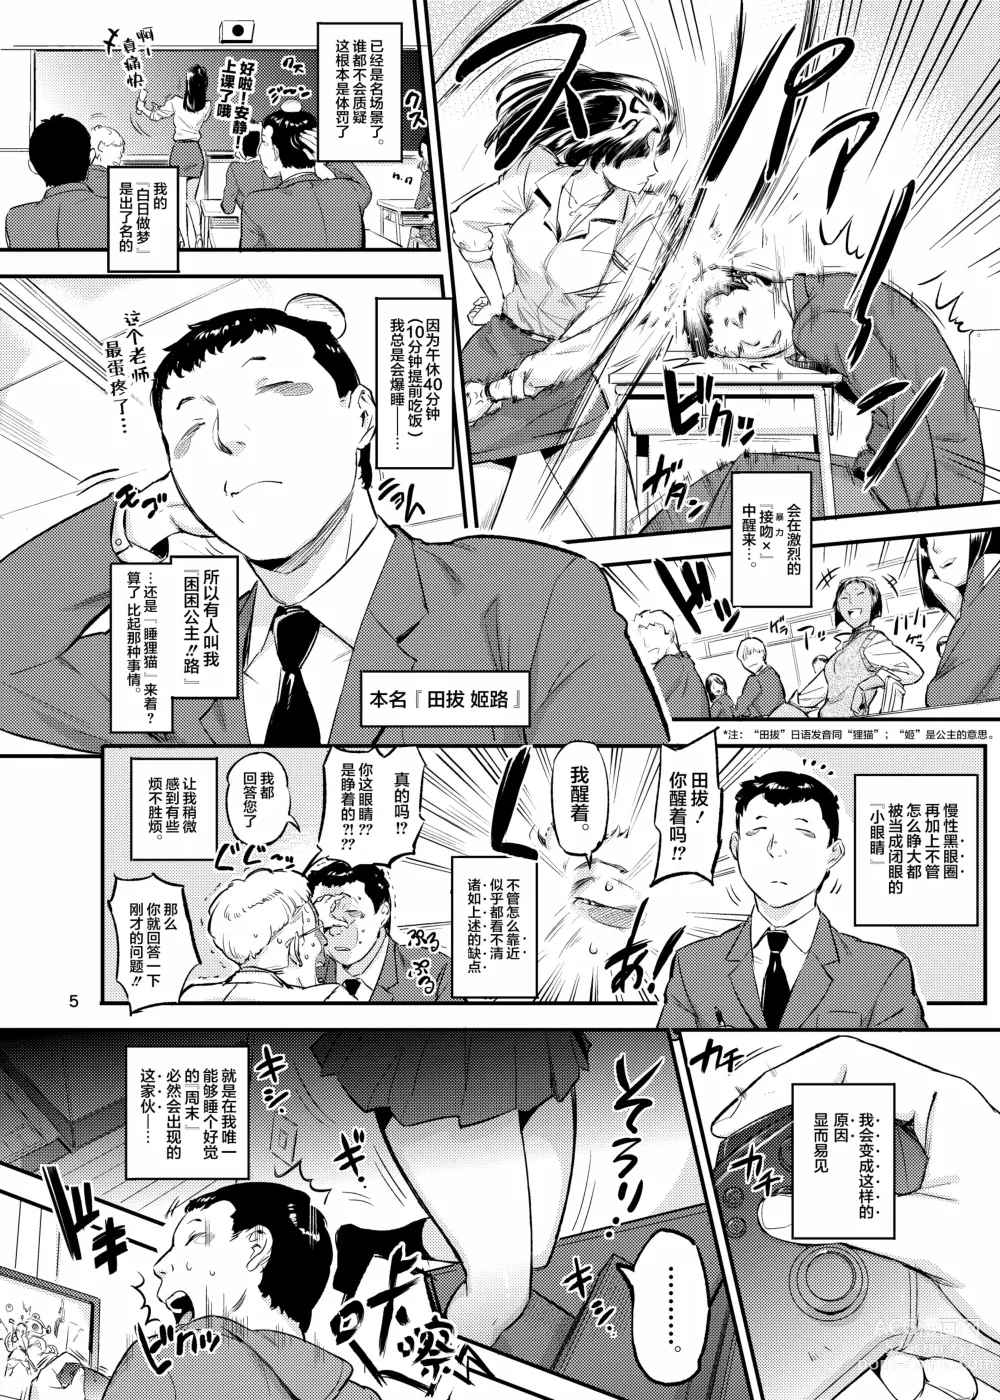 Page 5 of doujinshi 涎みつばッ!